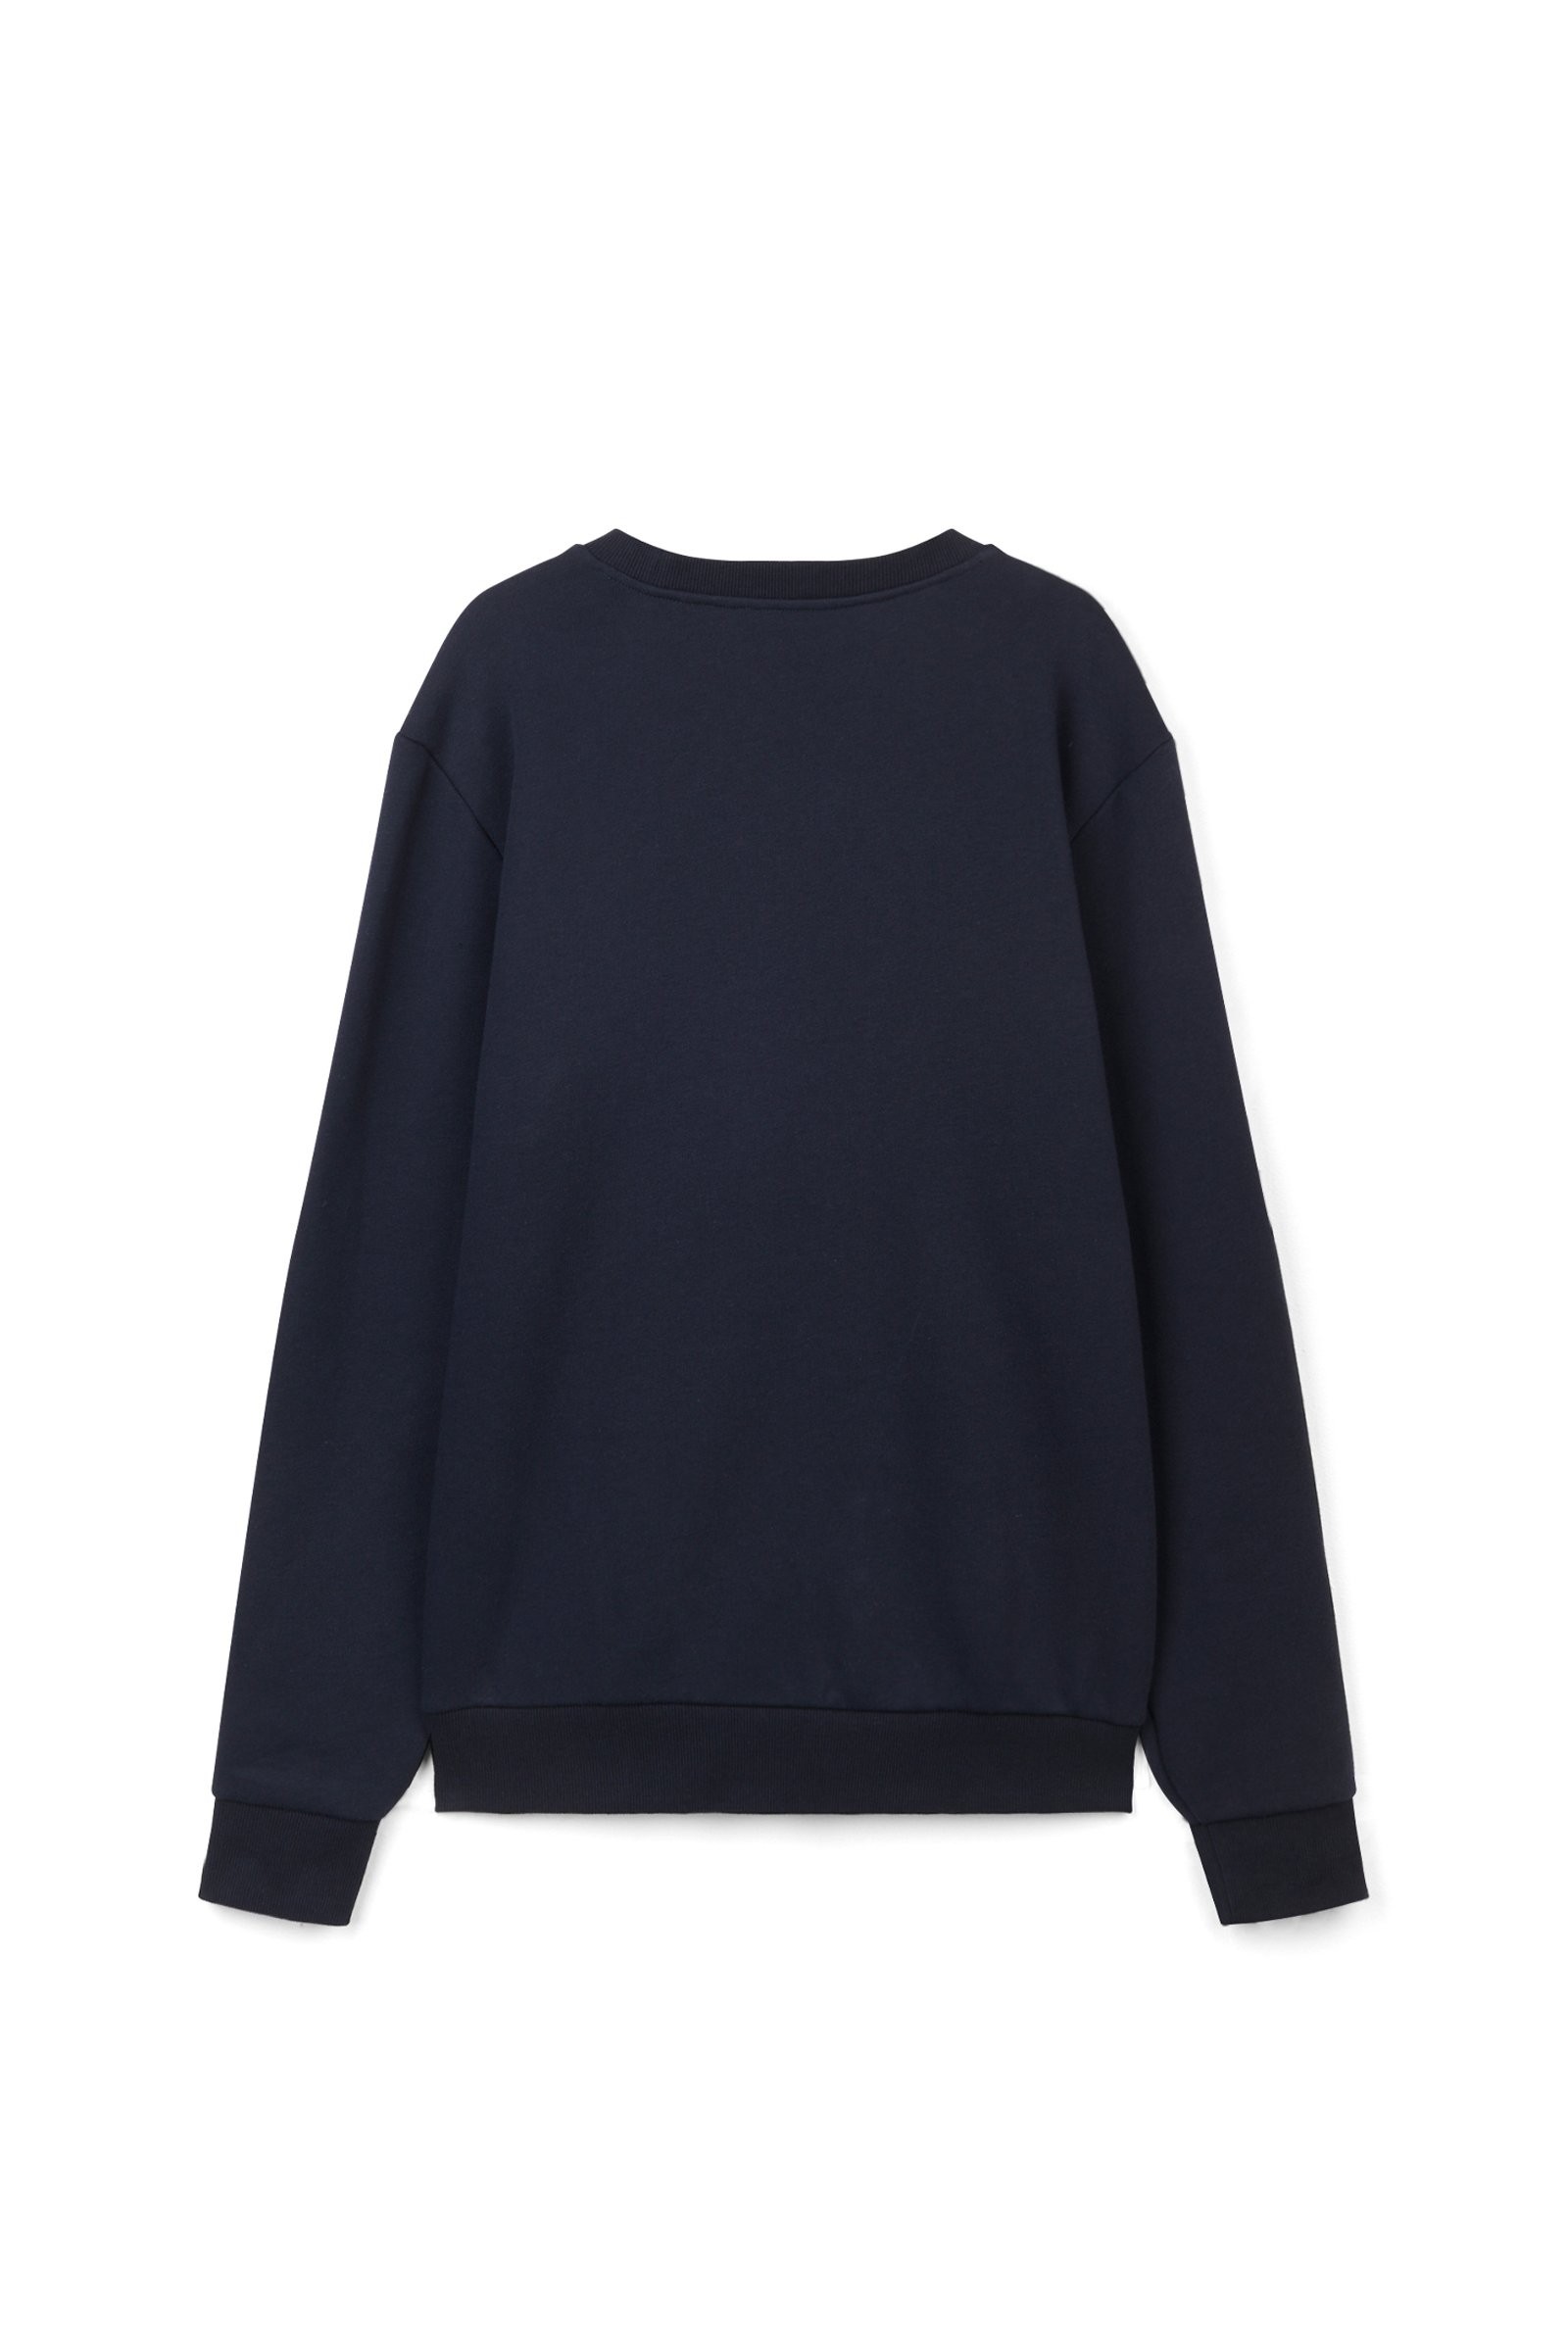 CKS - FIG - sweater - donkerblauw